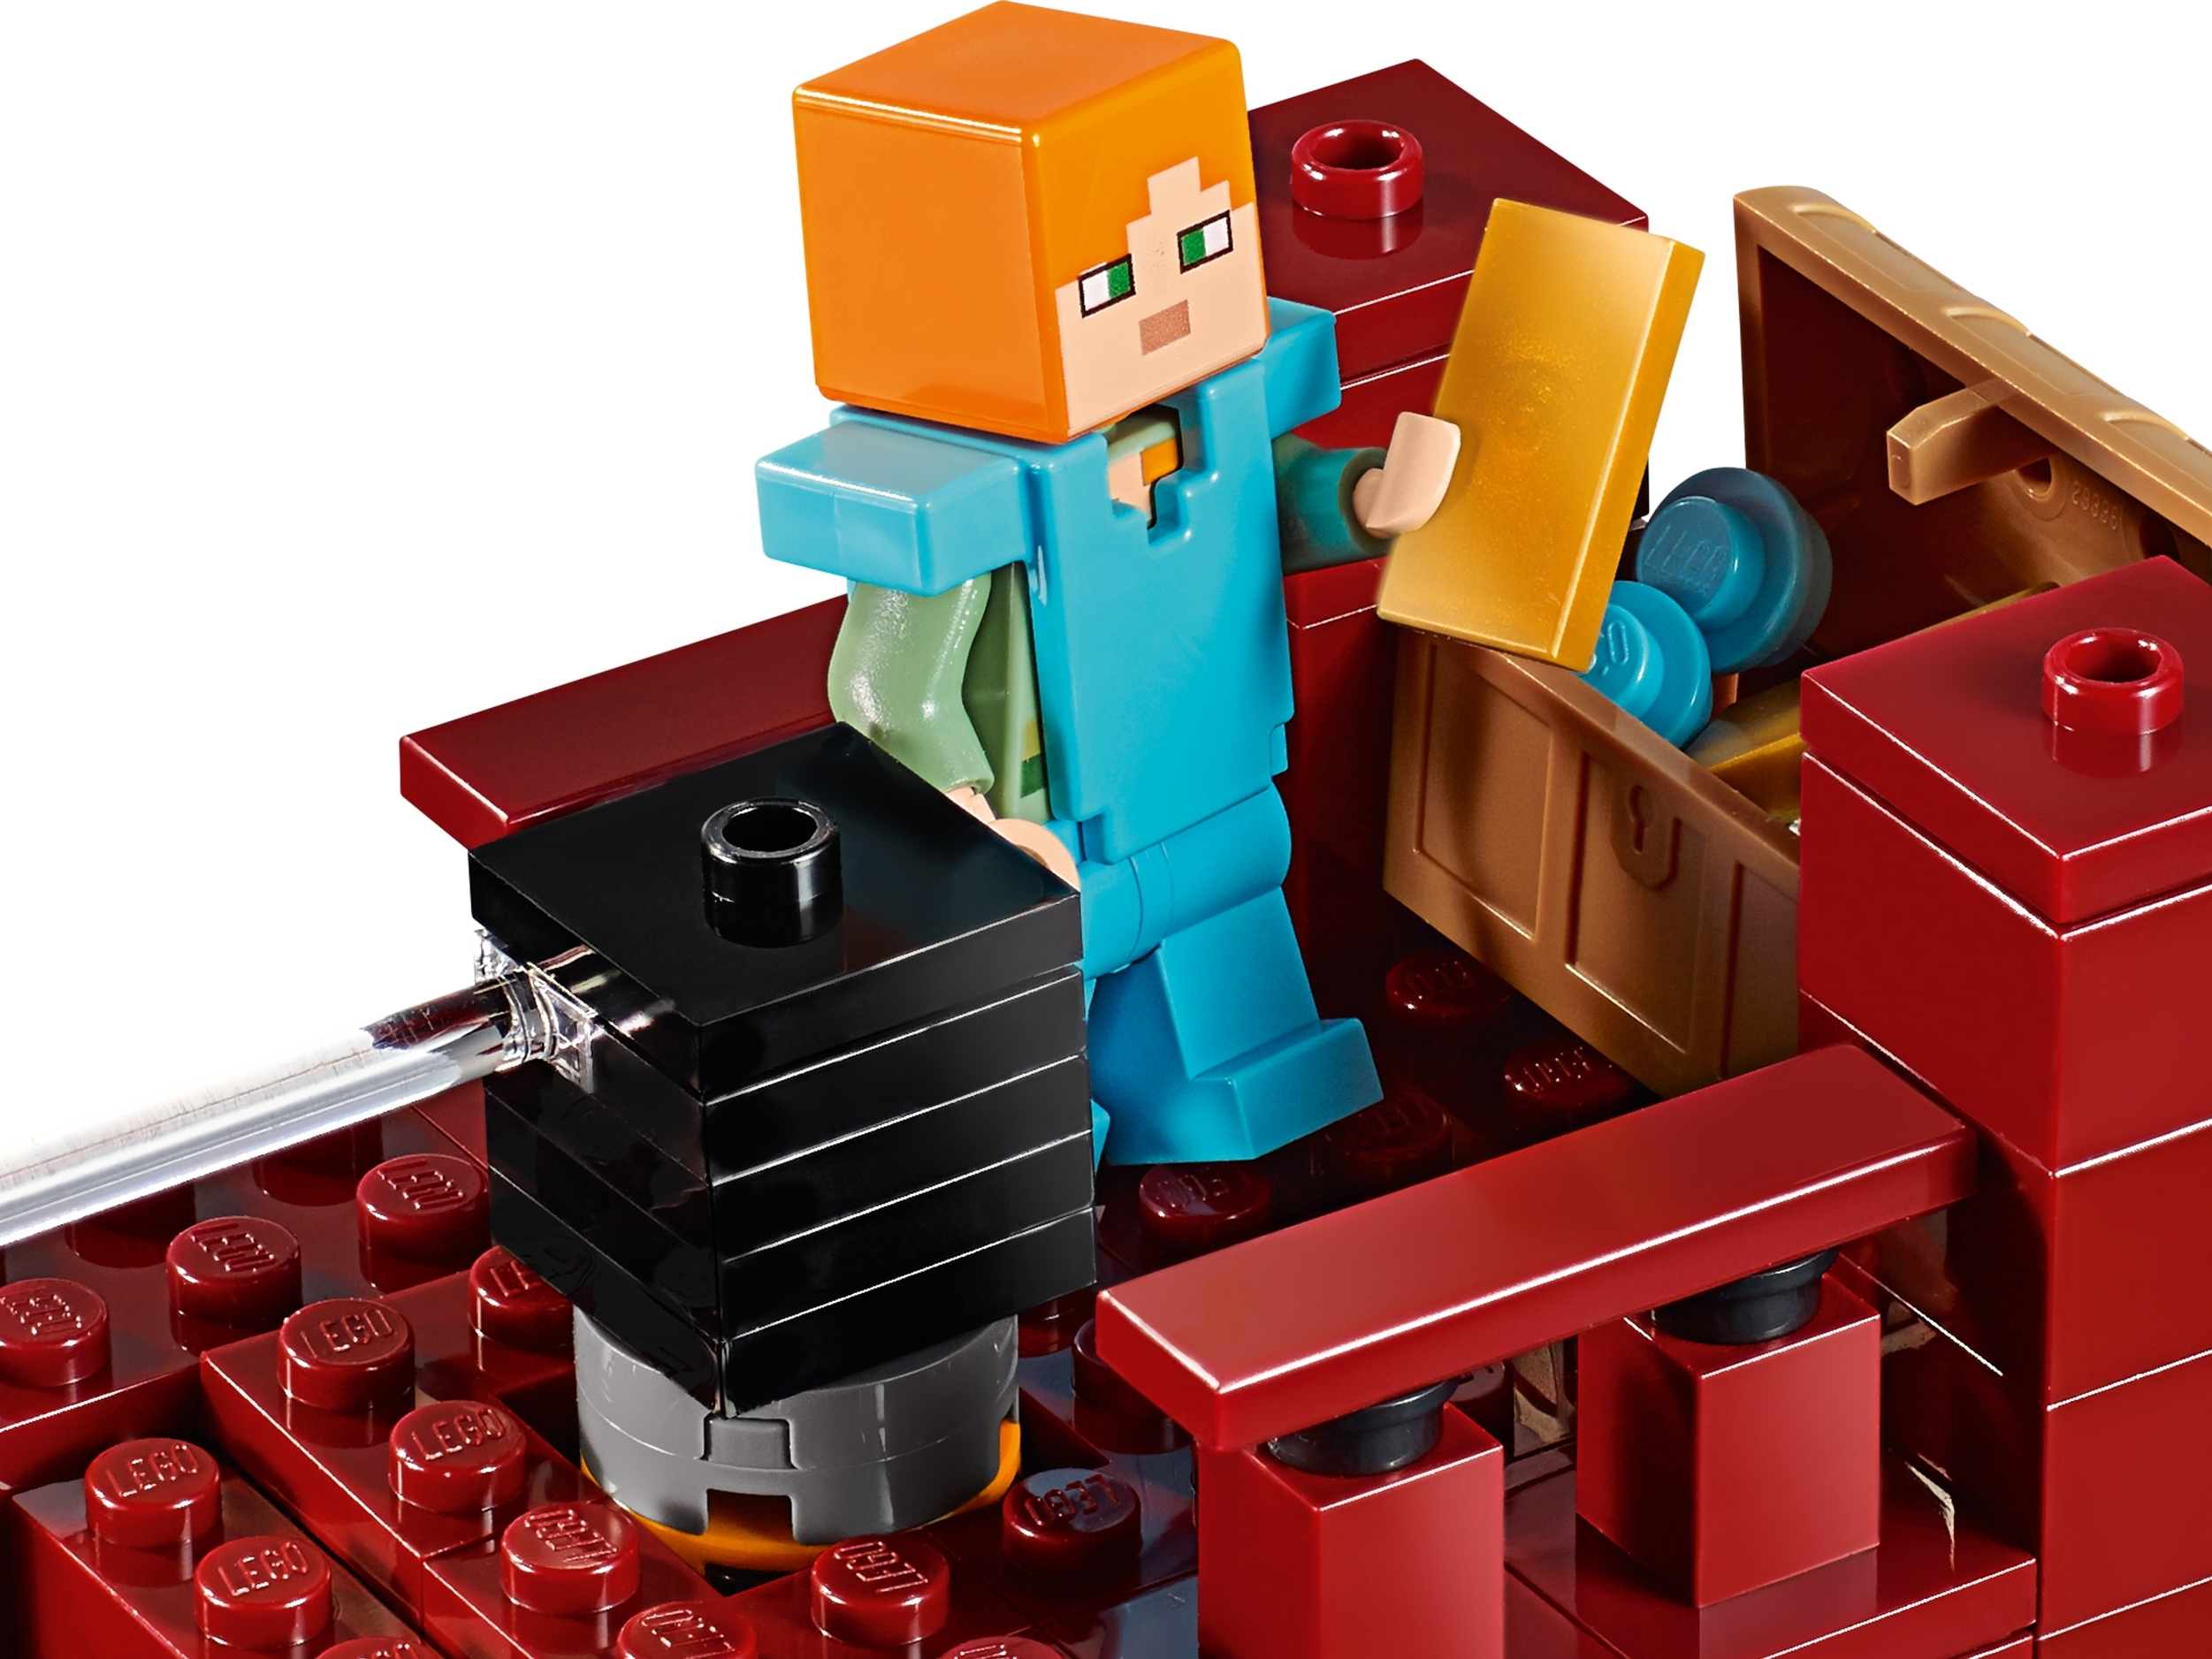 The Blaze Bridge 21154 | Minecraft® | Buy online at the LEGO® Shop